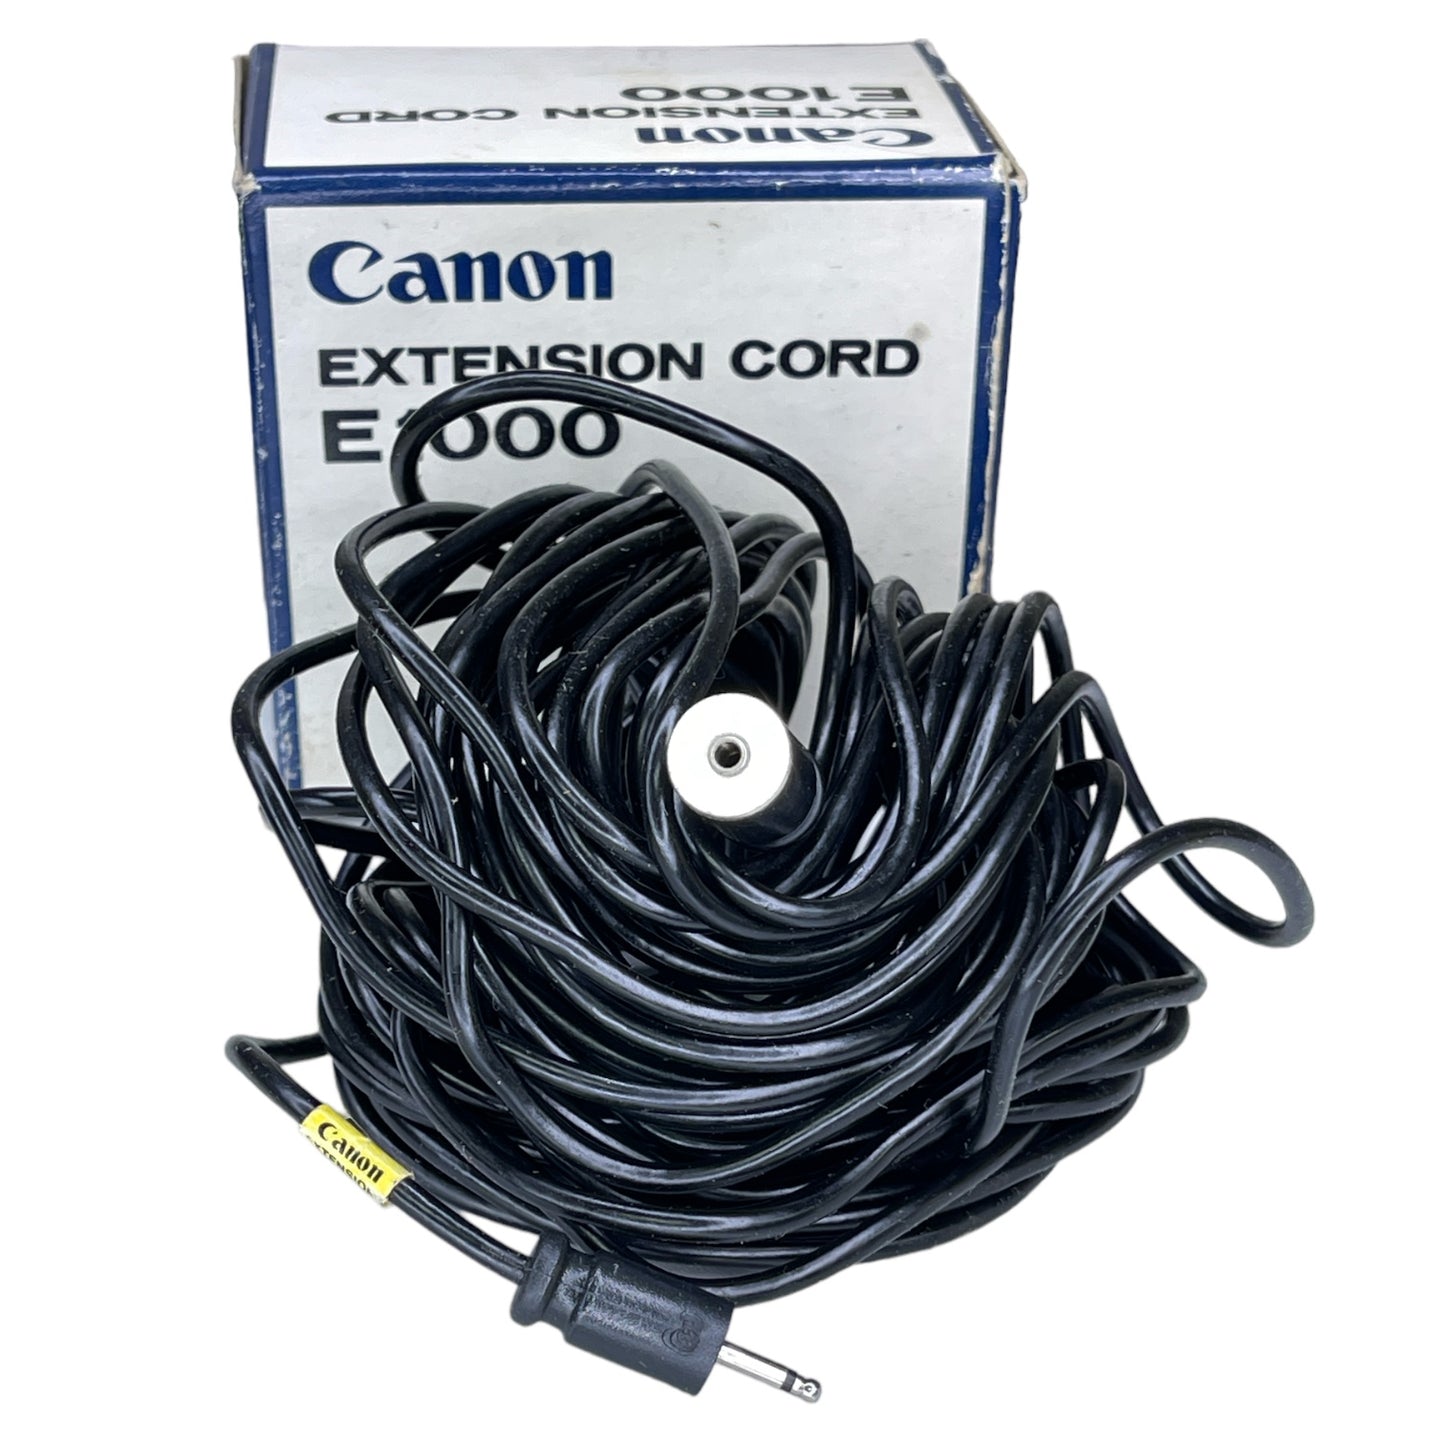 Canon Extension Cord E1000